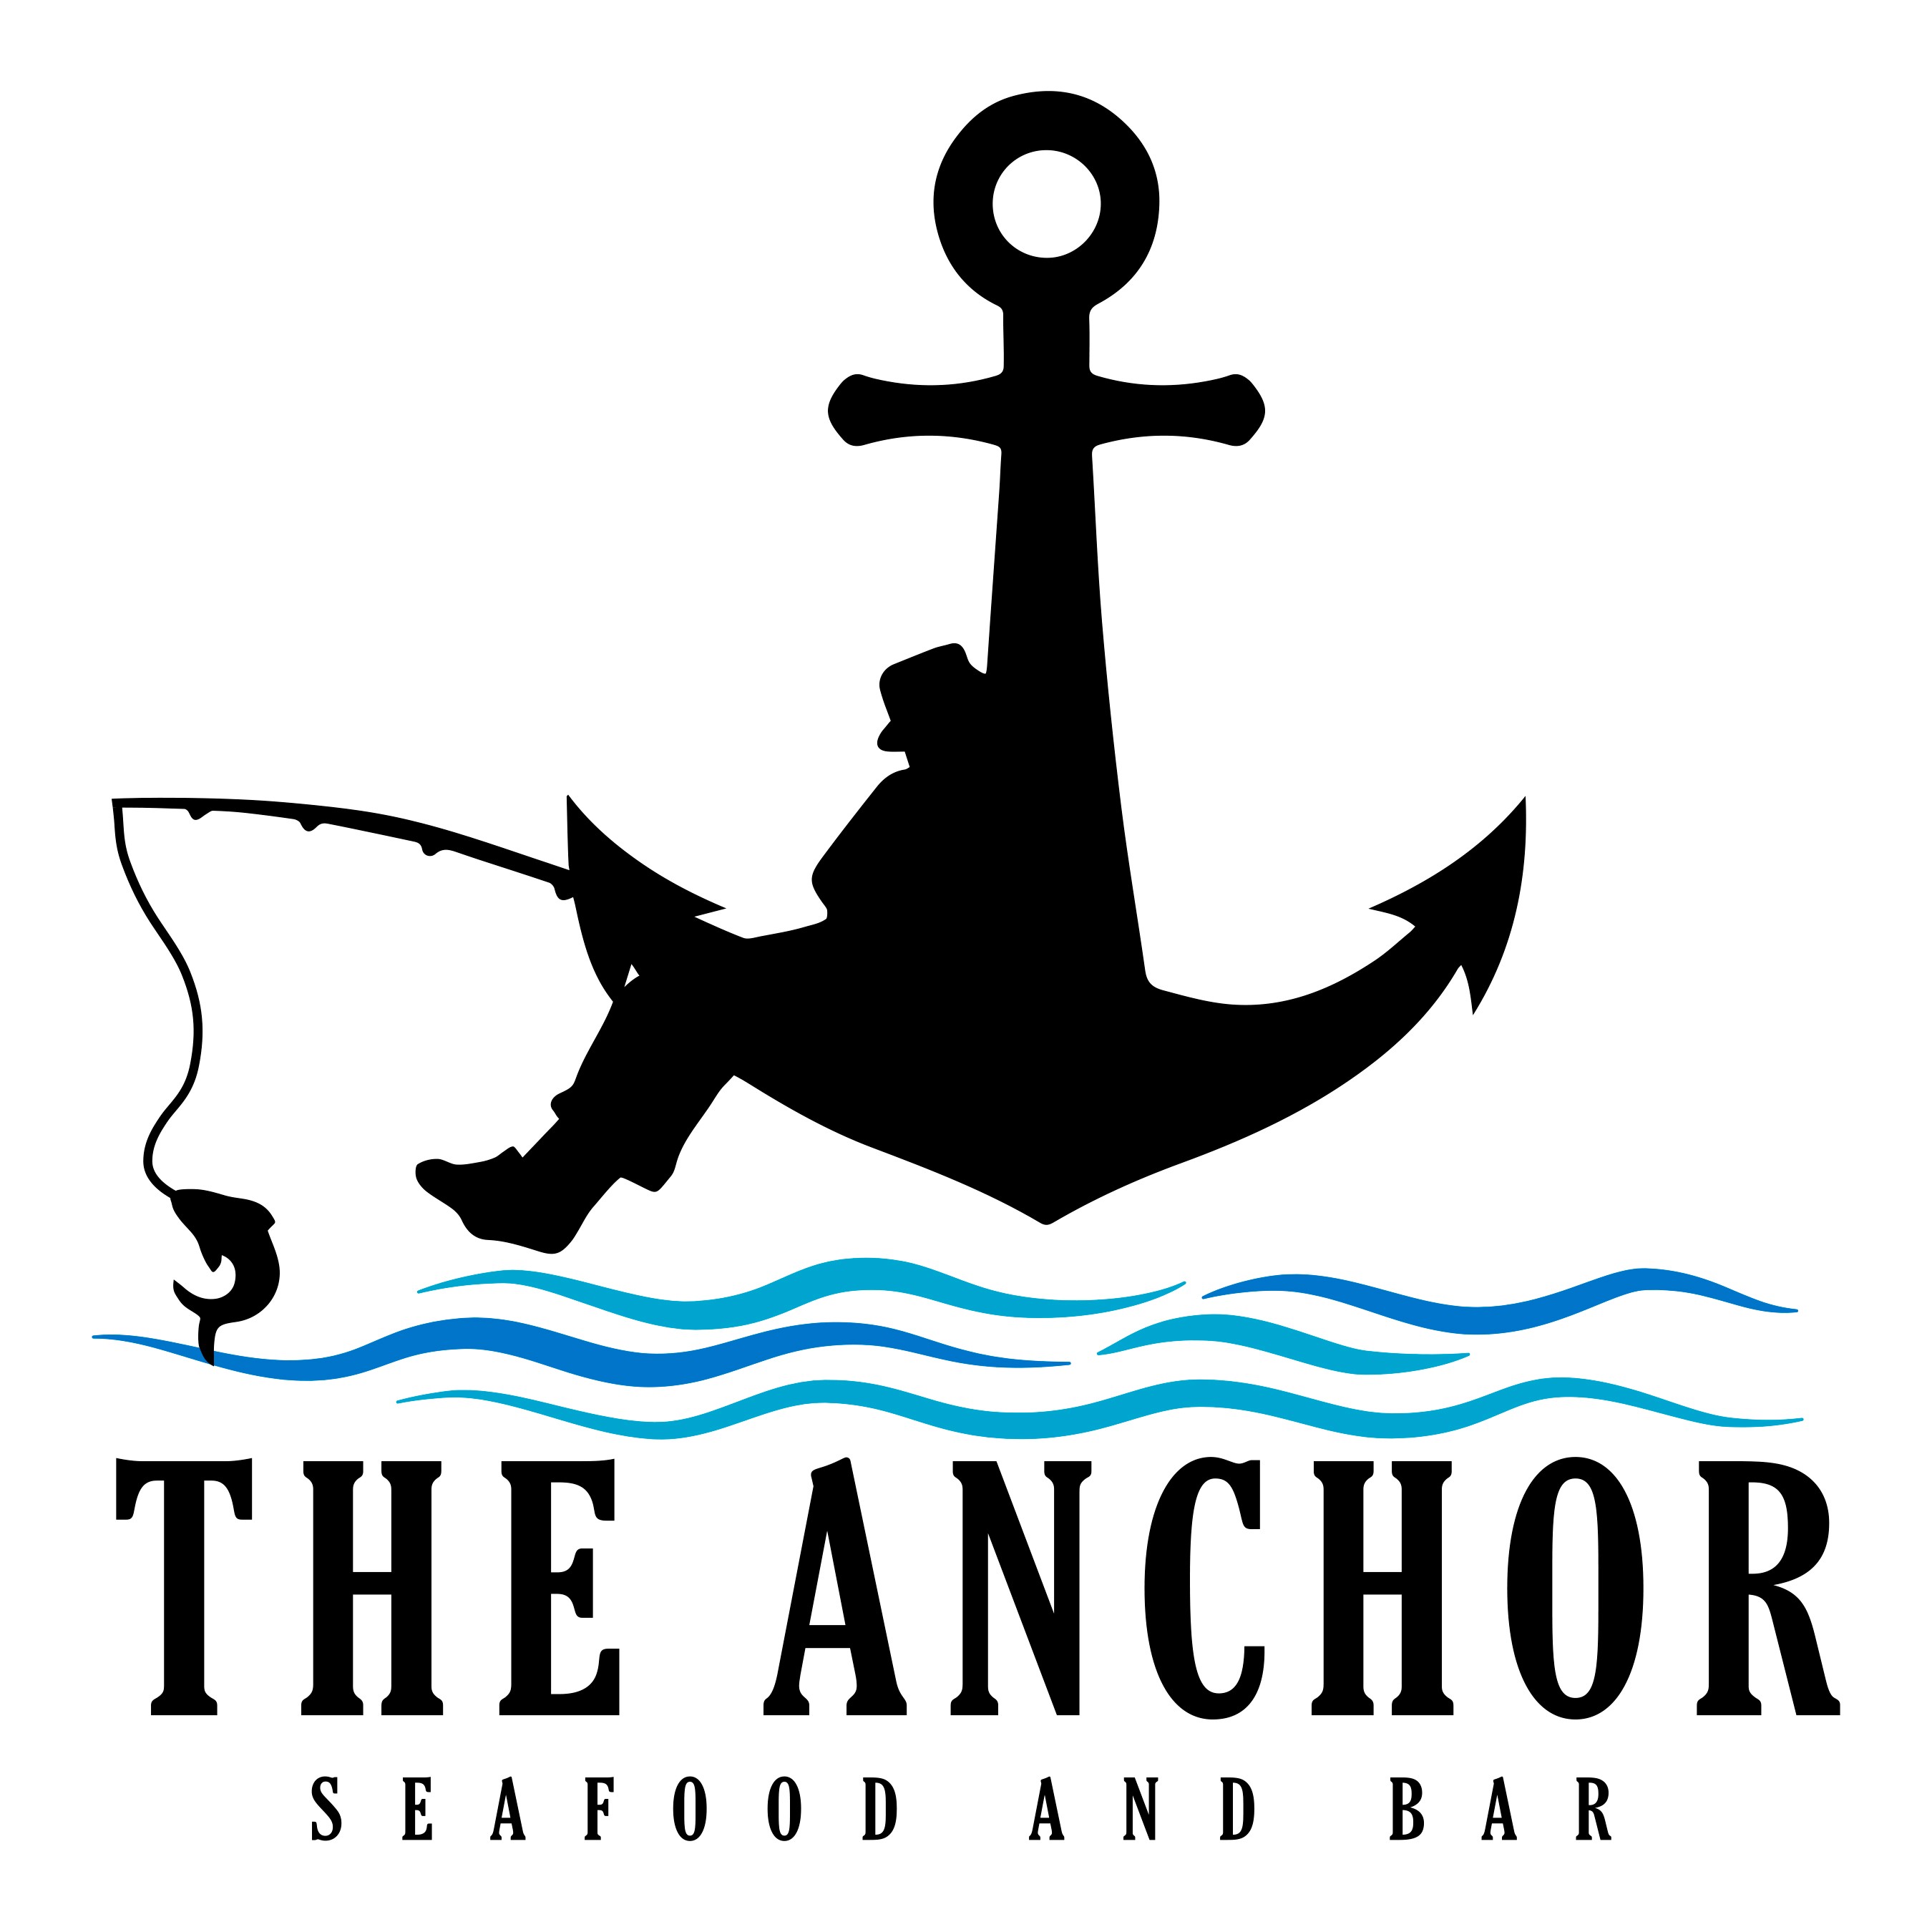 Heath The Anchor Seafood and Bar